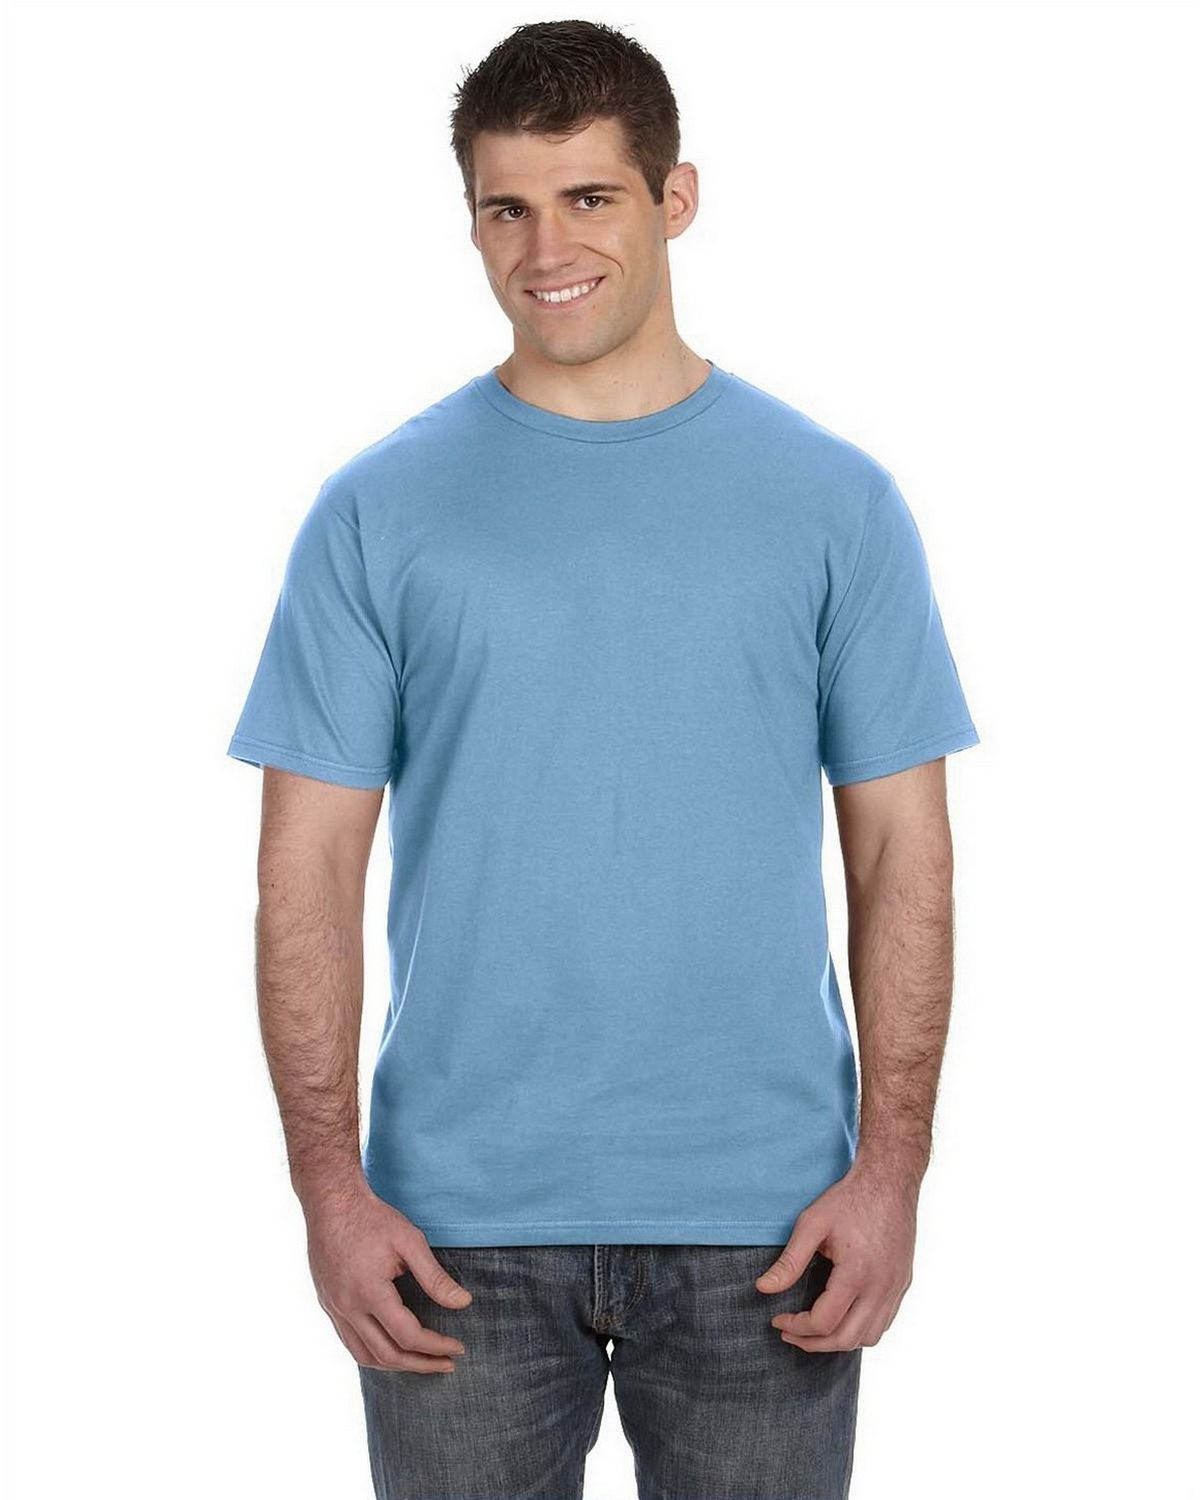 Anvil 980 Men's Ringspun Cotton Fashion-Fit T-Shirt